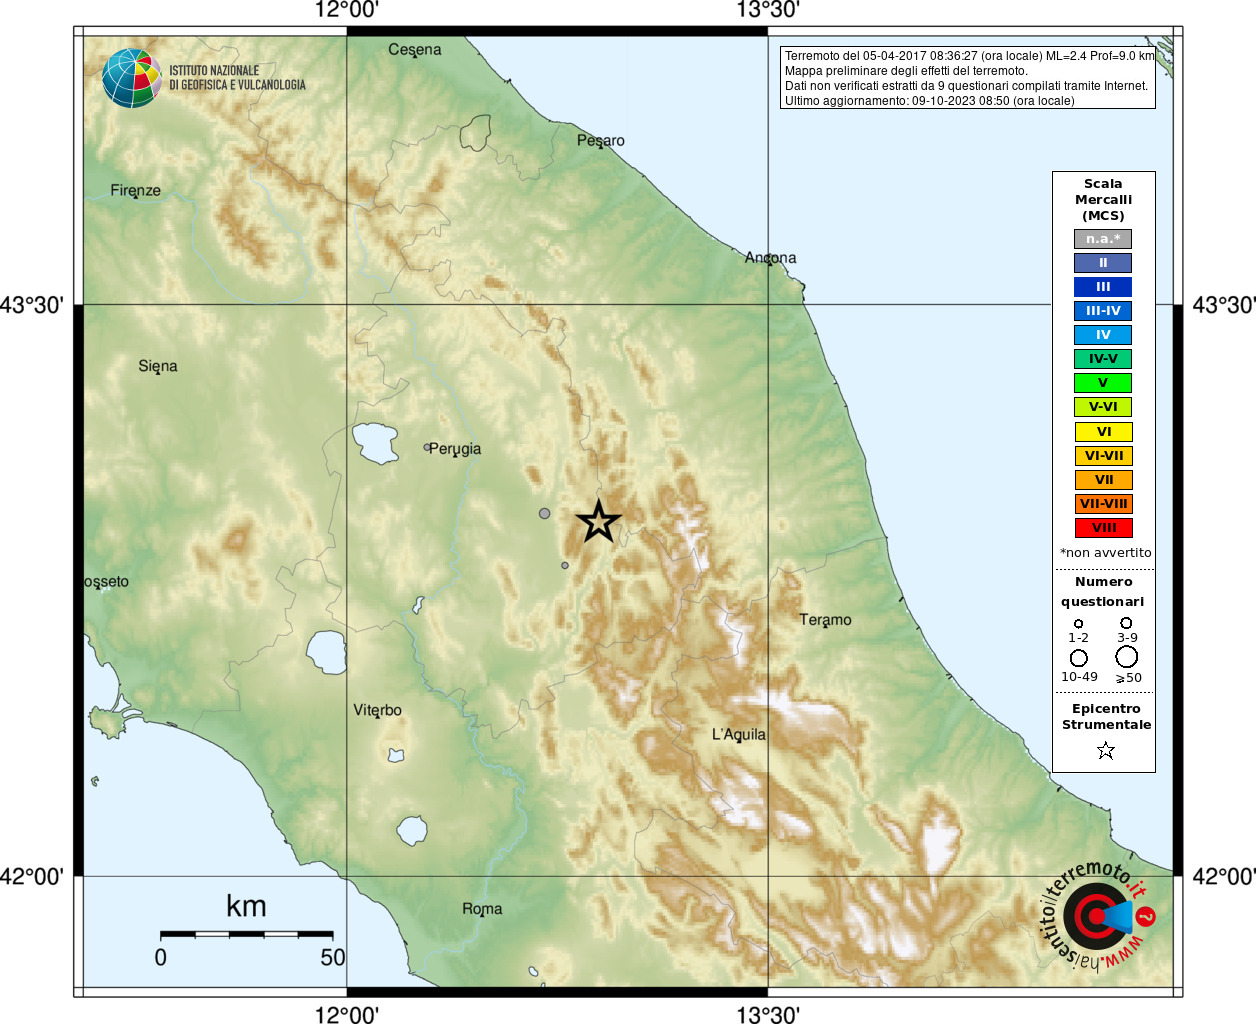 Earthquake 5 km NW Sellano (PG), Magnitude ML 2.4, 5 April 2017 time 08:36:27 ...